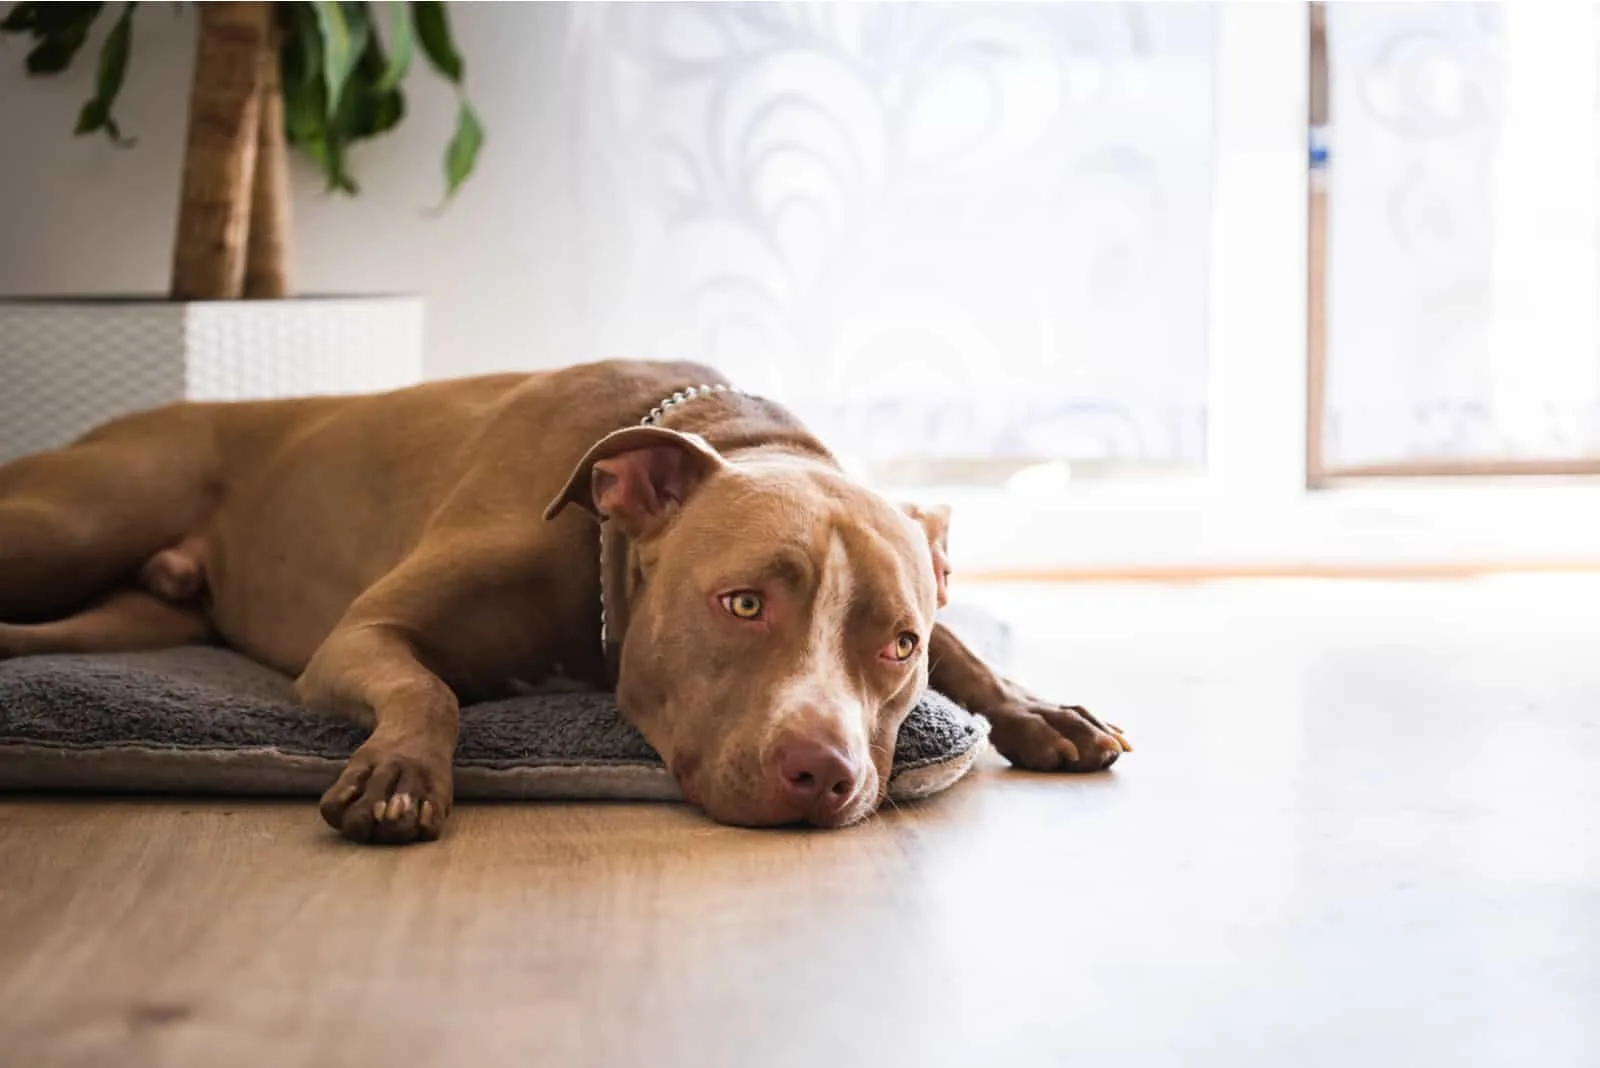 Dog lying on wooden floor indoors